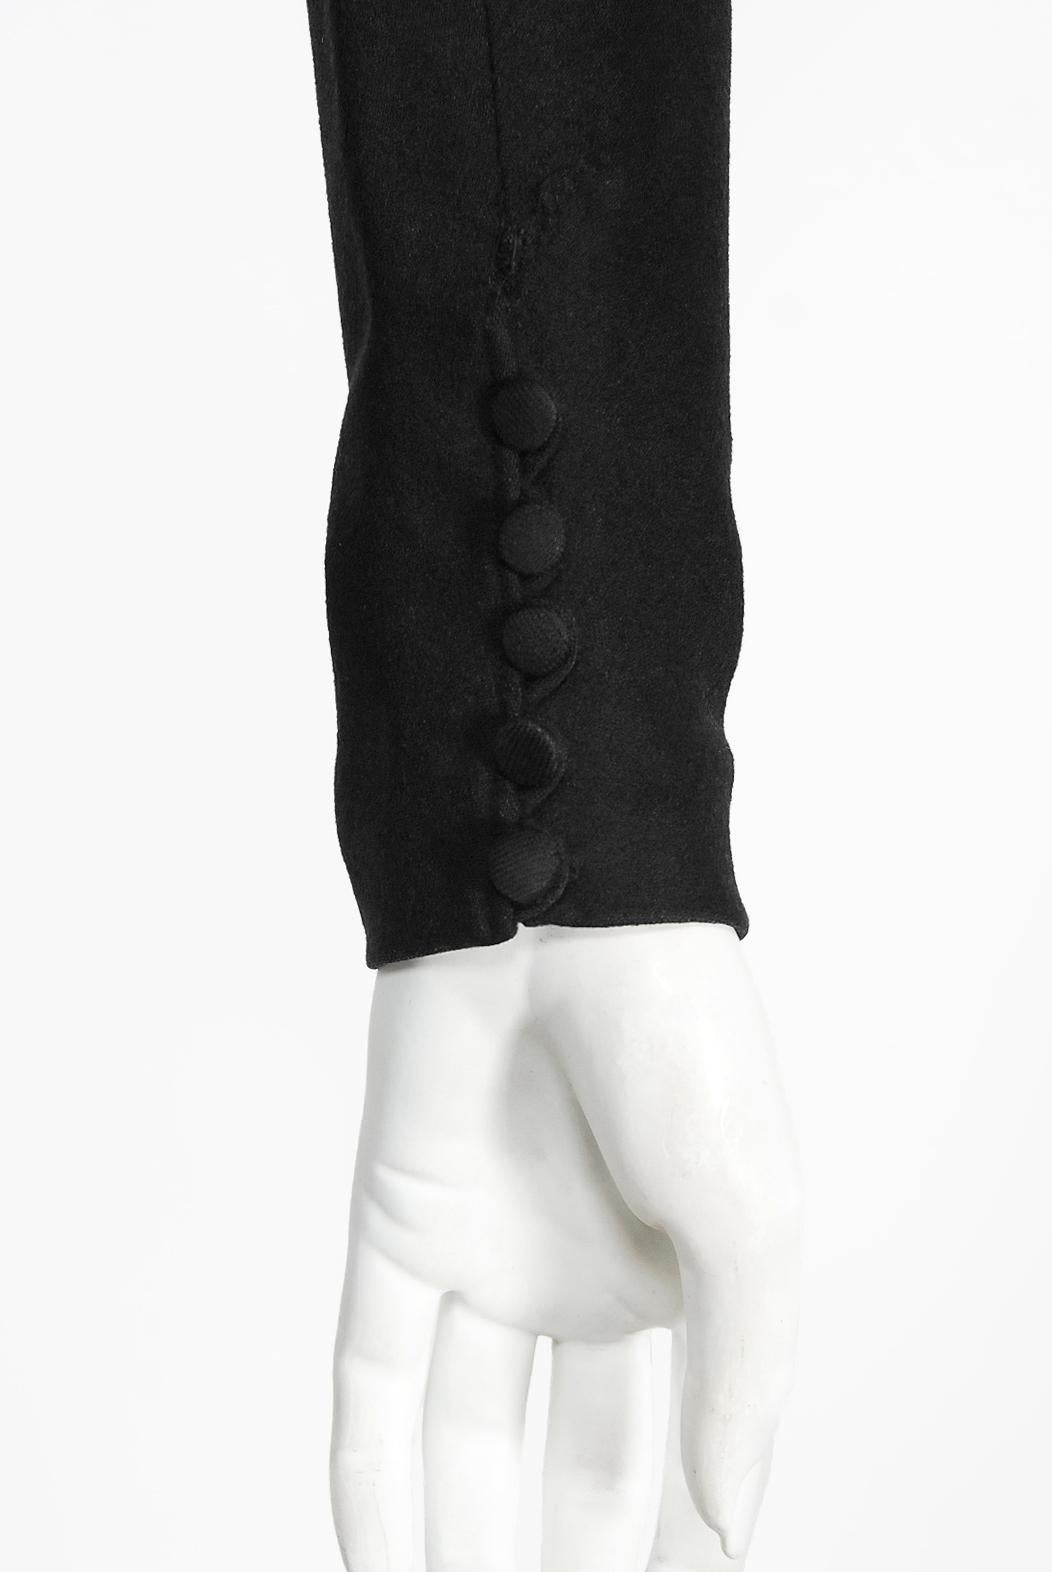 Vintage 1949 Lanvin Haute Couture Documented Sculpted Black Wool Cocktail Dress 5